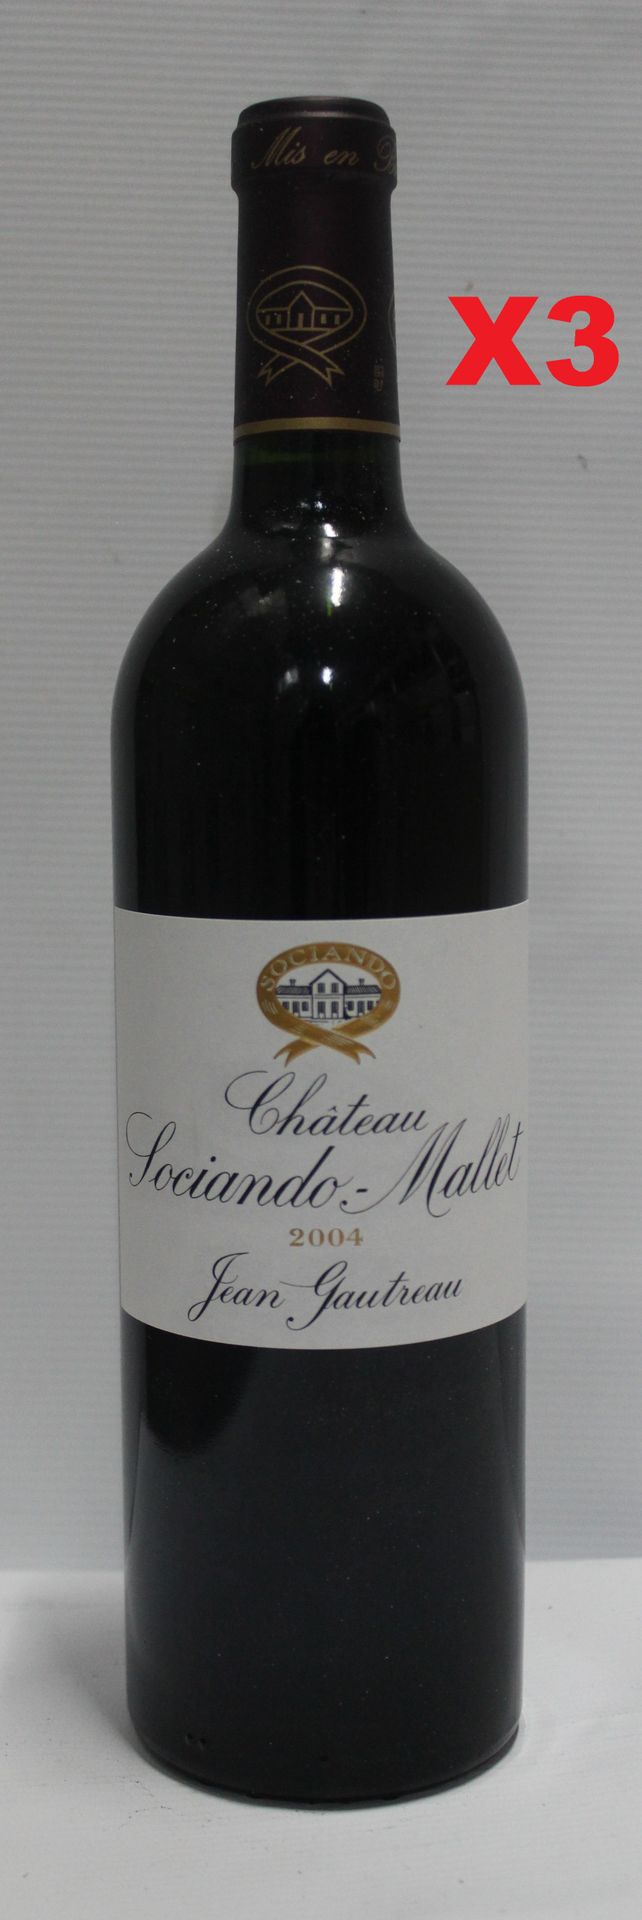 Null 3 Botellas 75cl - Haut-Médoc - Château SOCIANDO MALLET - Tinto 2004

Botell&hellip;